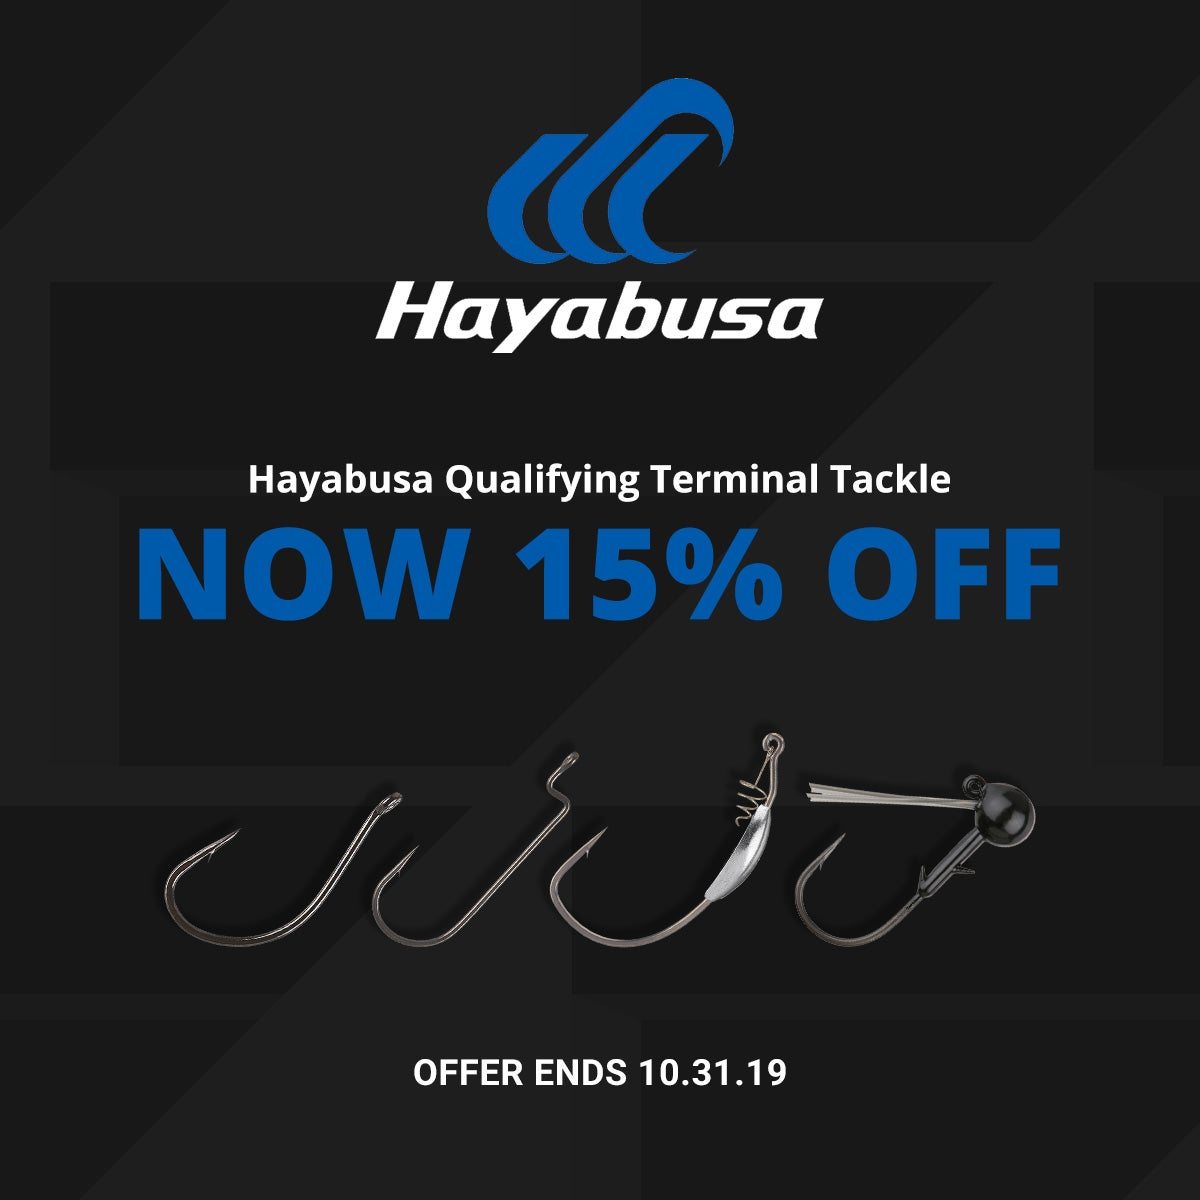 Hayabusa Qualifying Terminal Tackle Now 15% Off